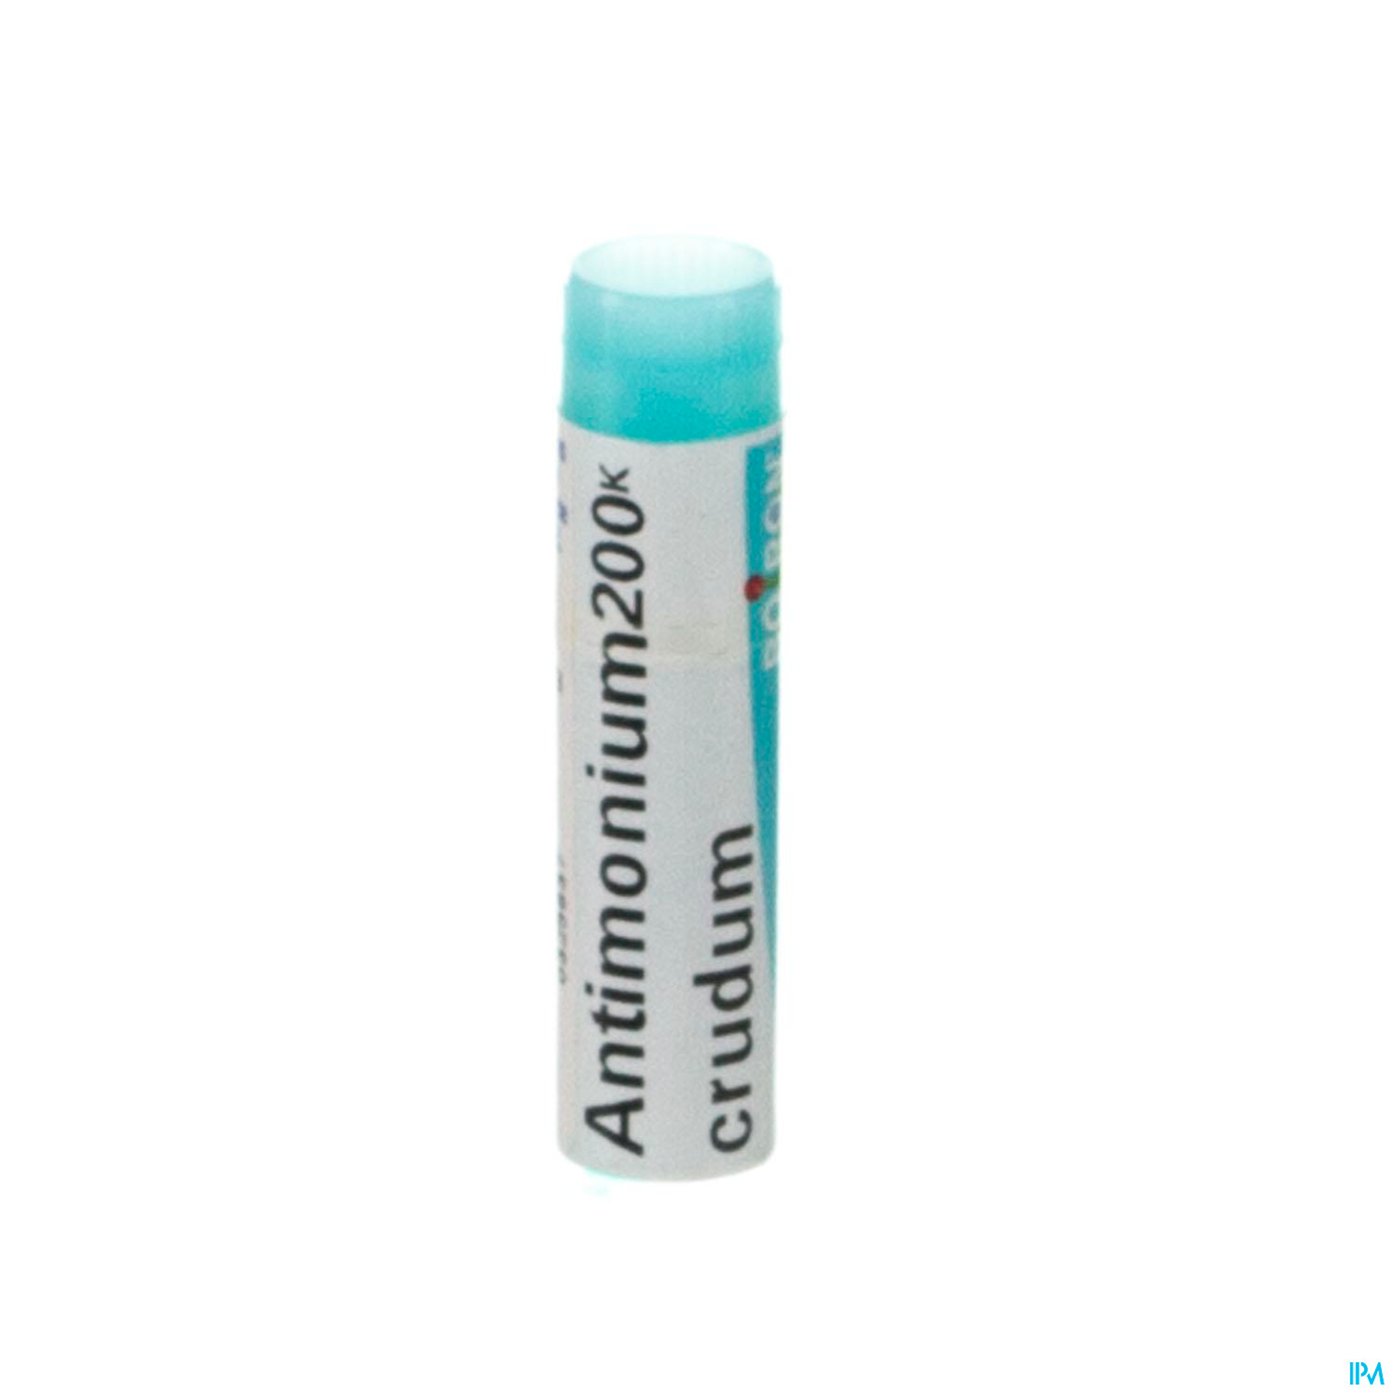 Antimonium Crudum 200k Gl Boiron packshot